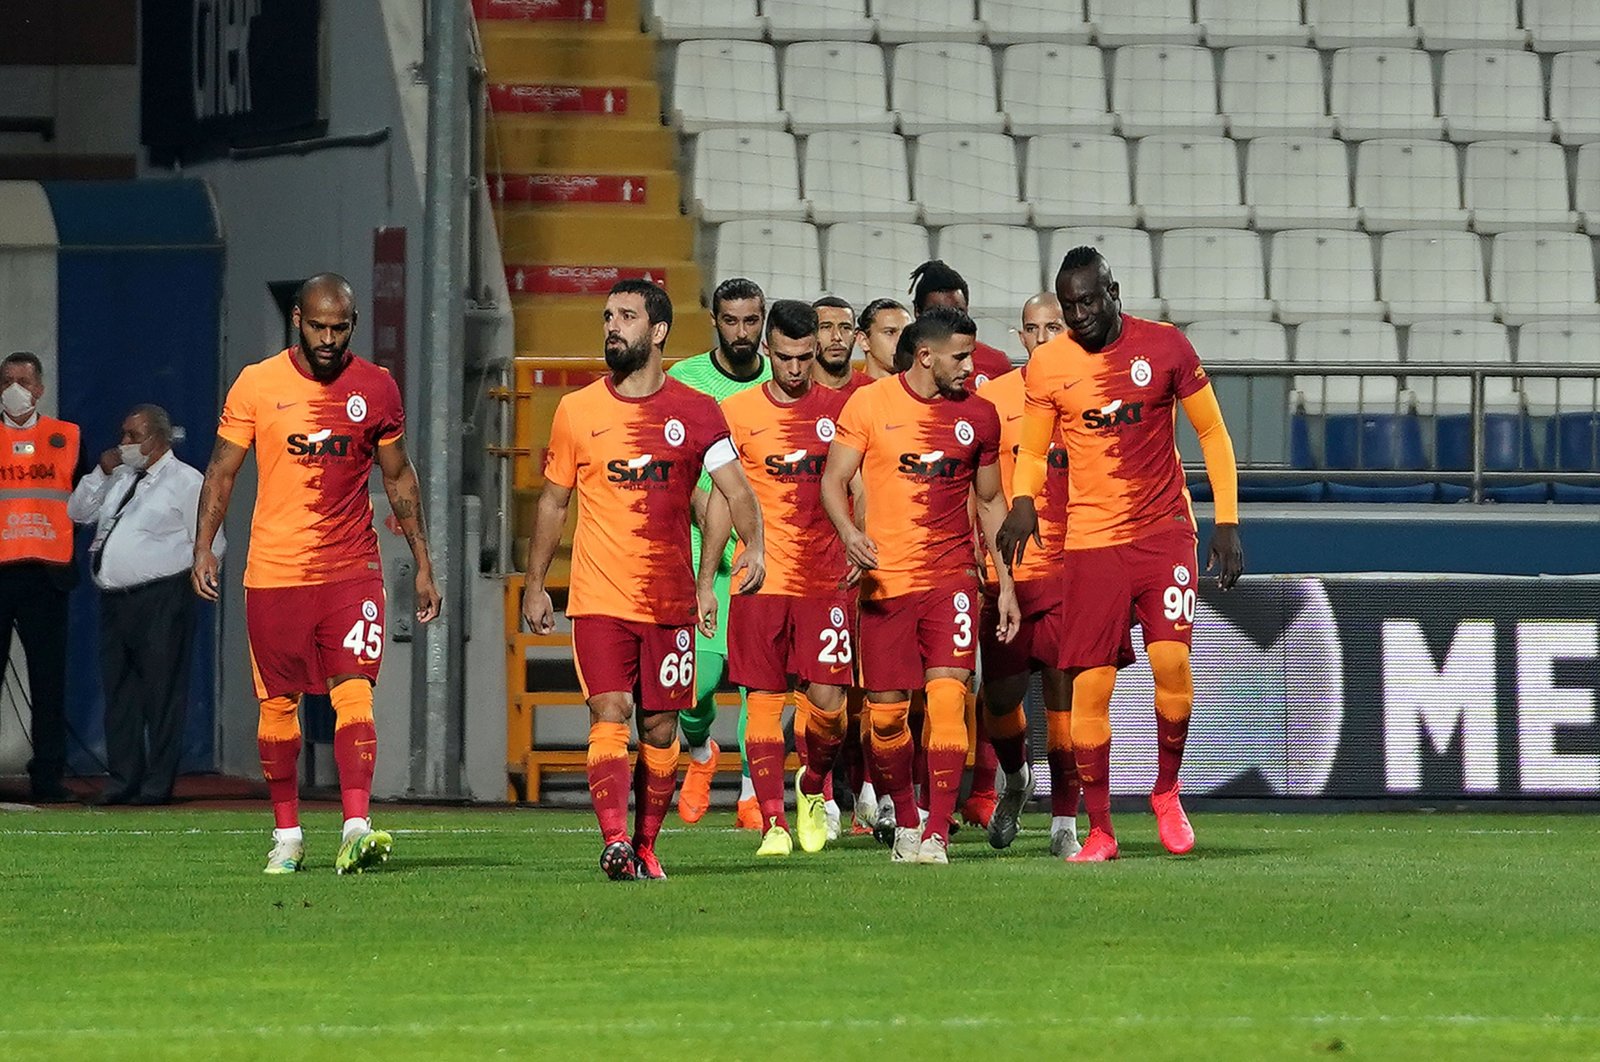 Galatasaray players walk on the pitch during a Süper Lig match against Kasımpaşa, in Istanbul, Turkey, Oct. 4, 2020. (IHA Photo)
